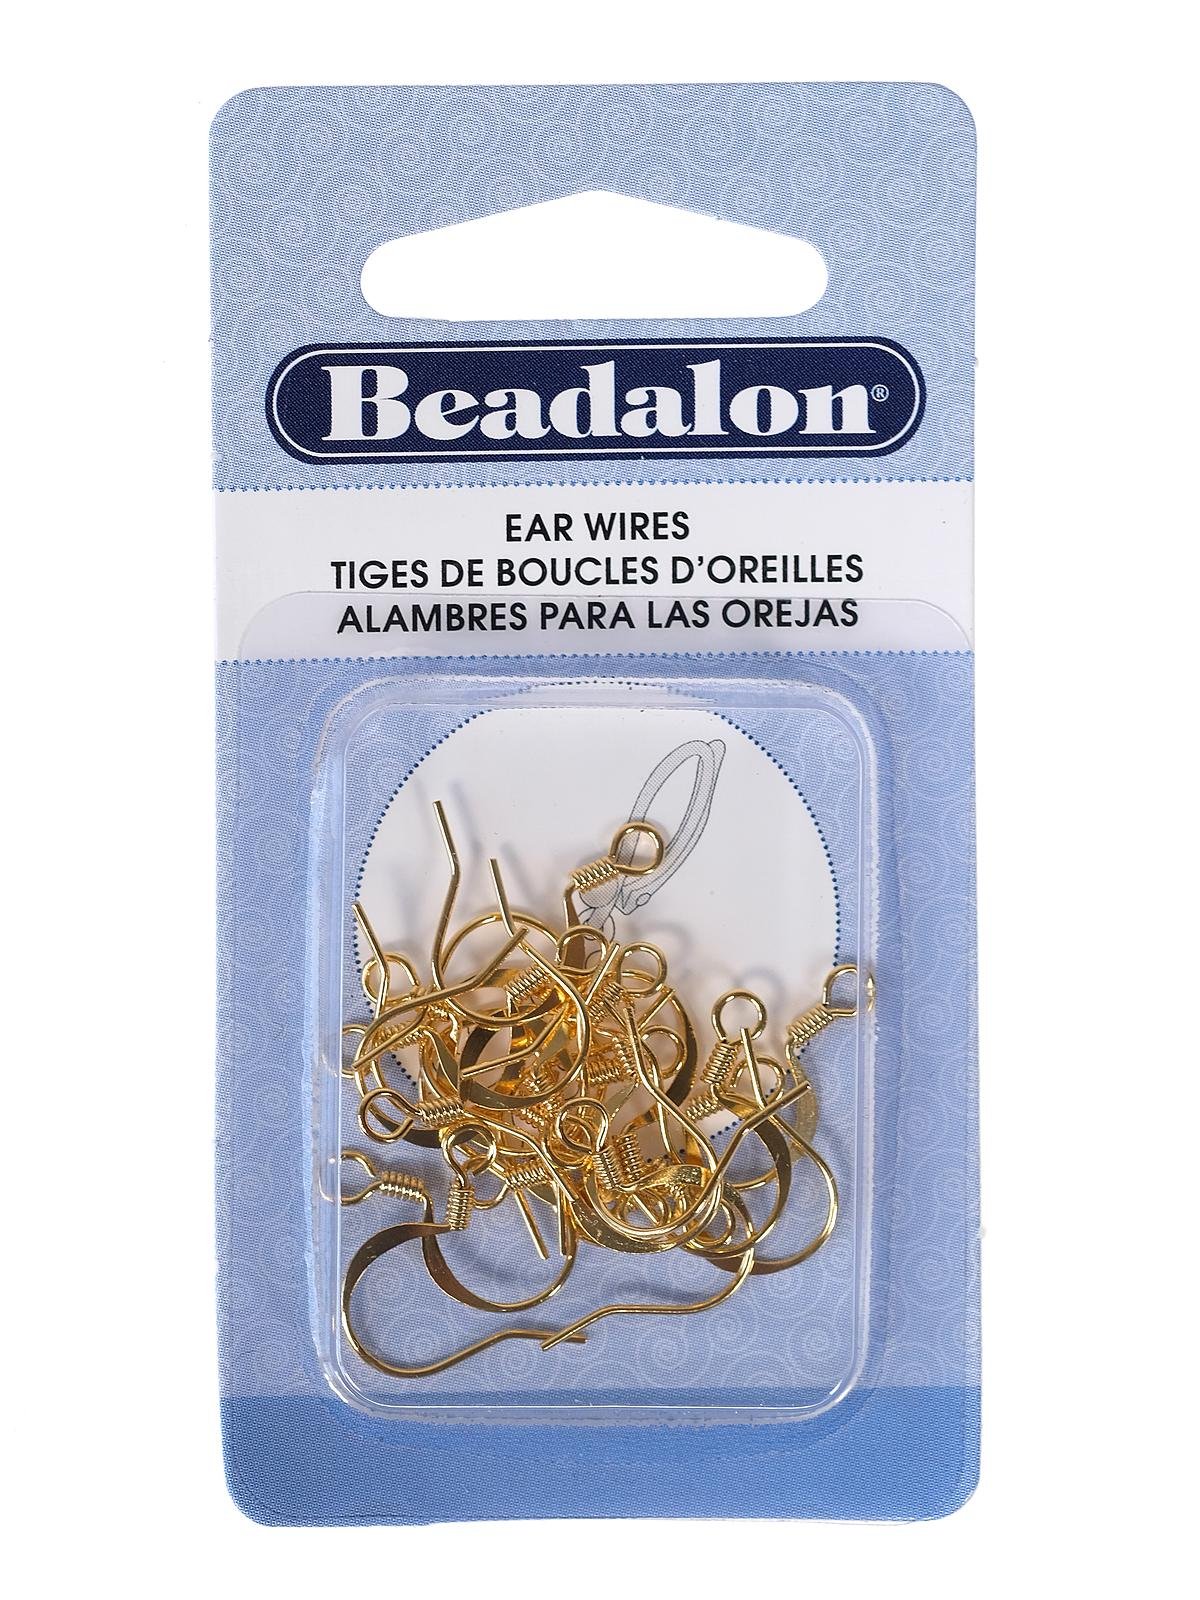 Beadalon - Ear Wires